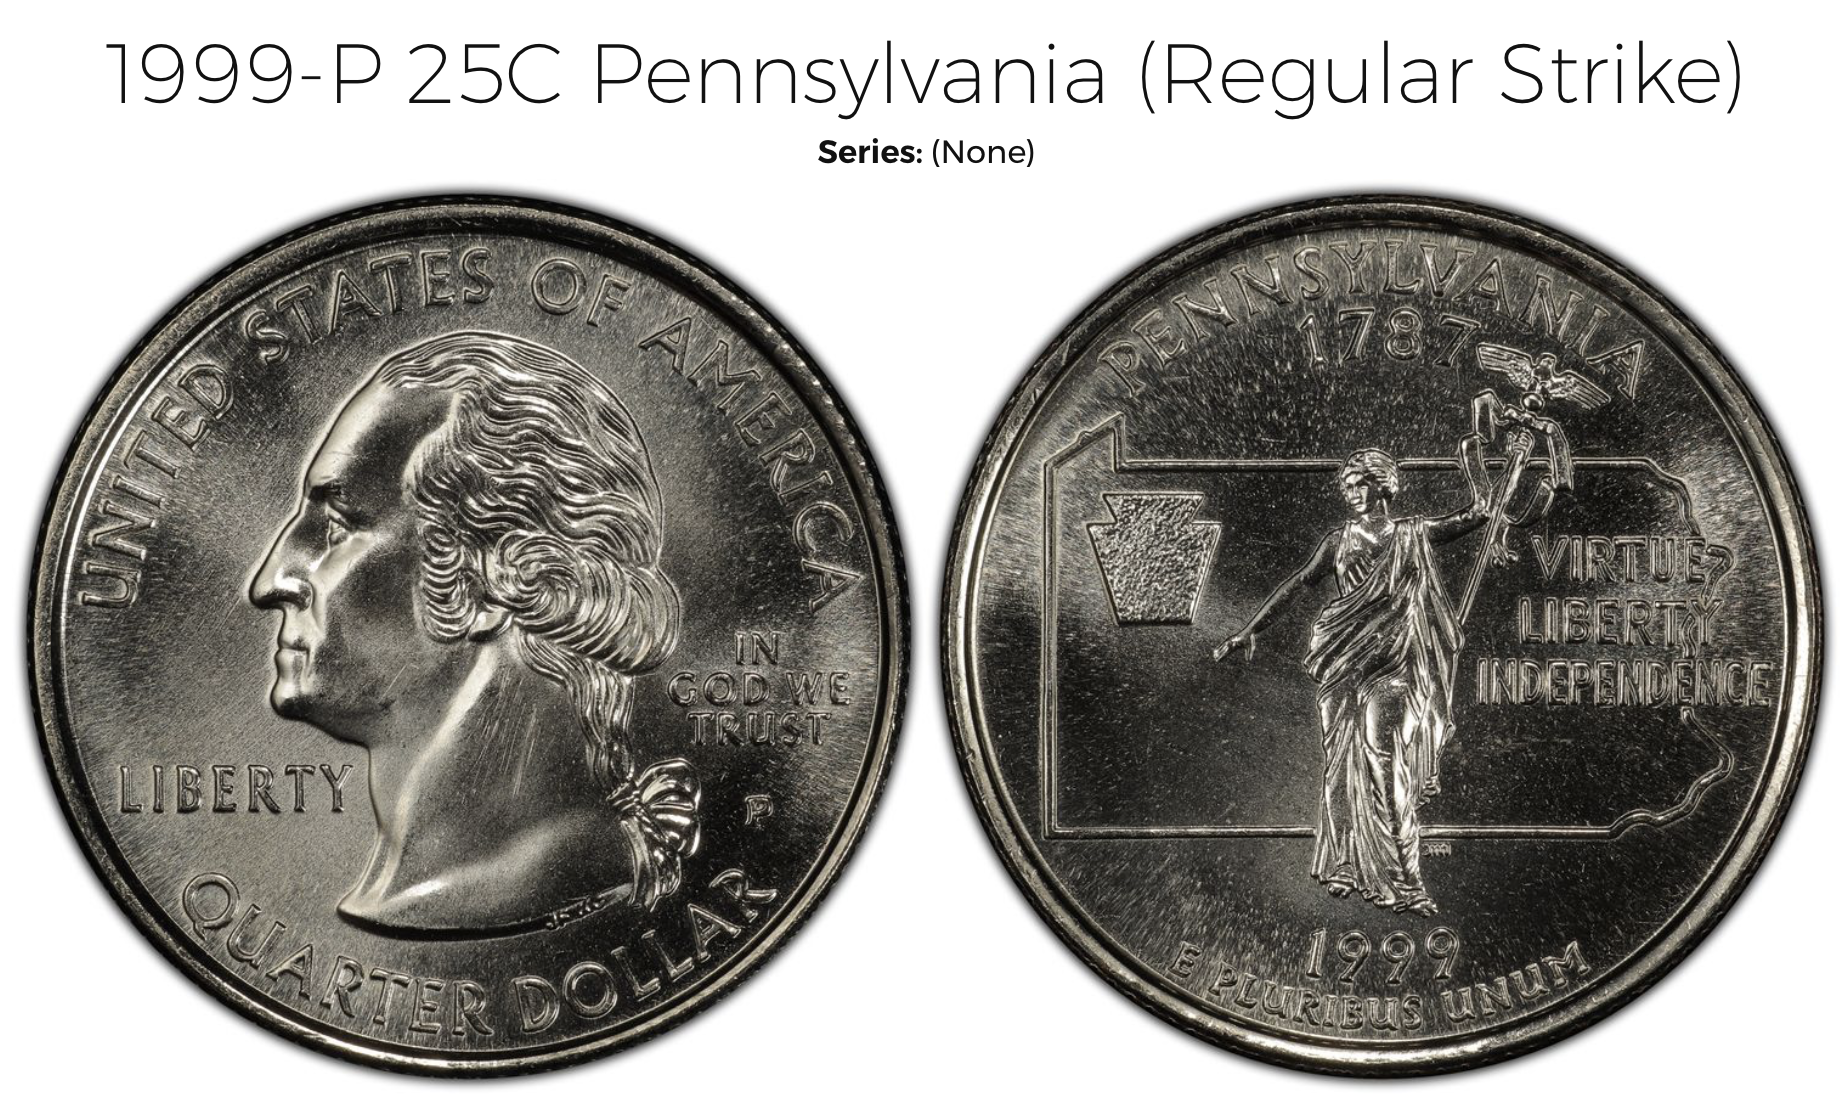 U.S. Mint Statehood Quarters